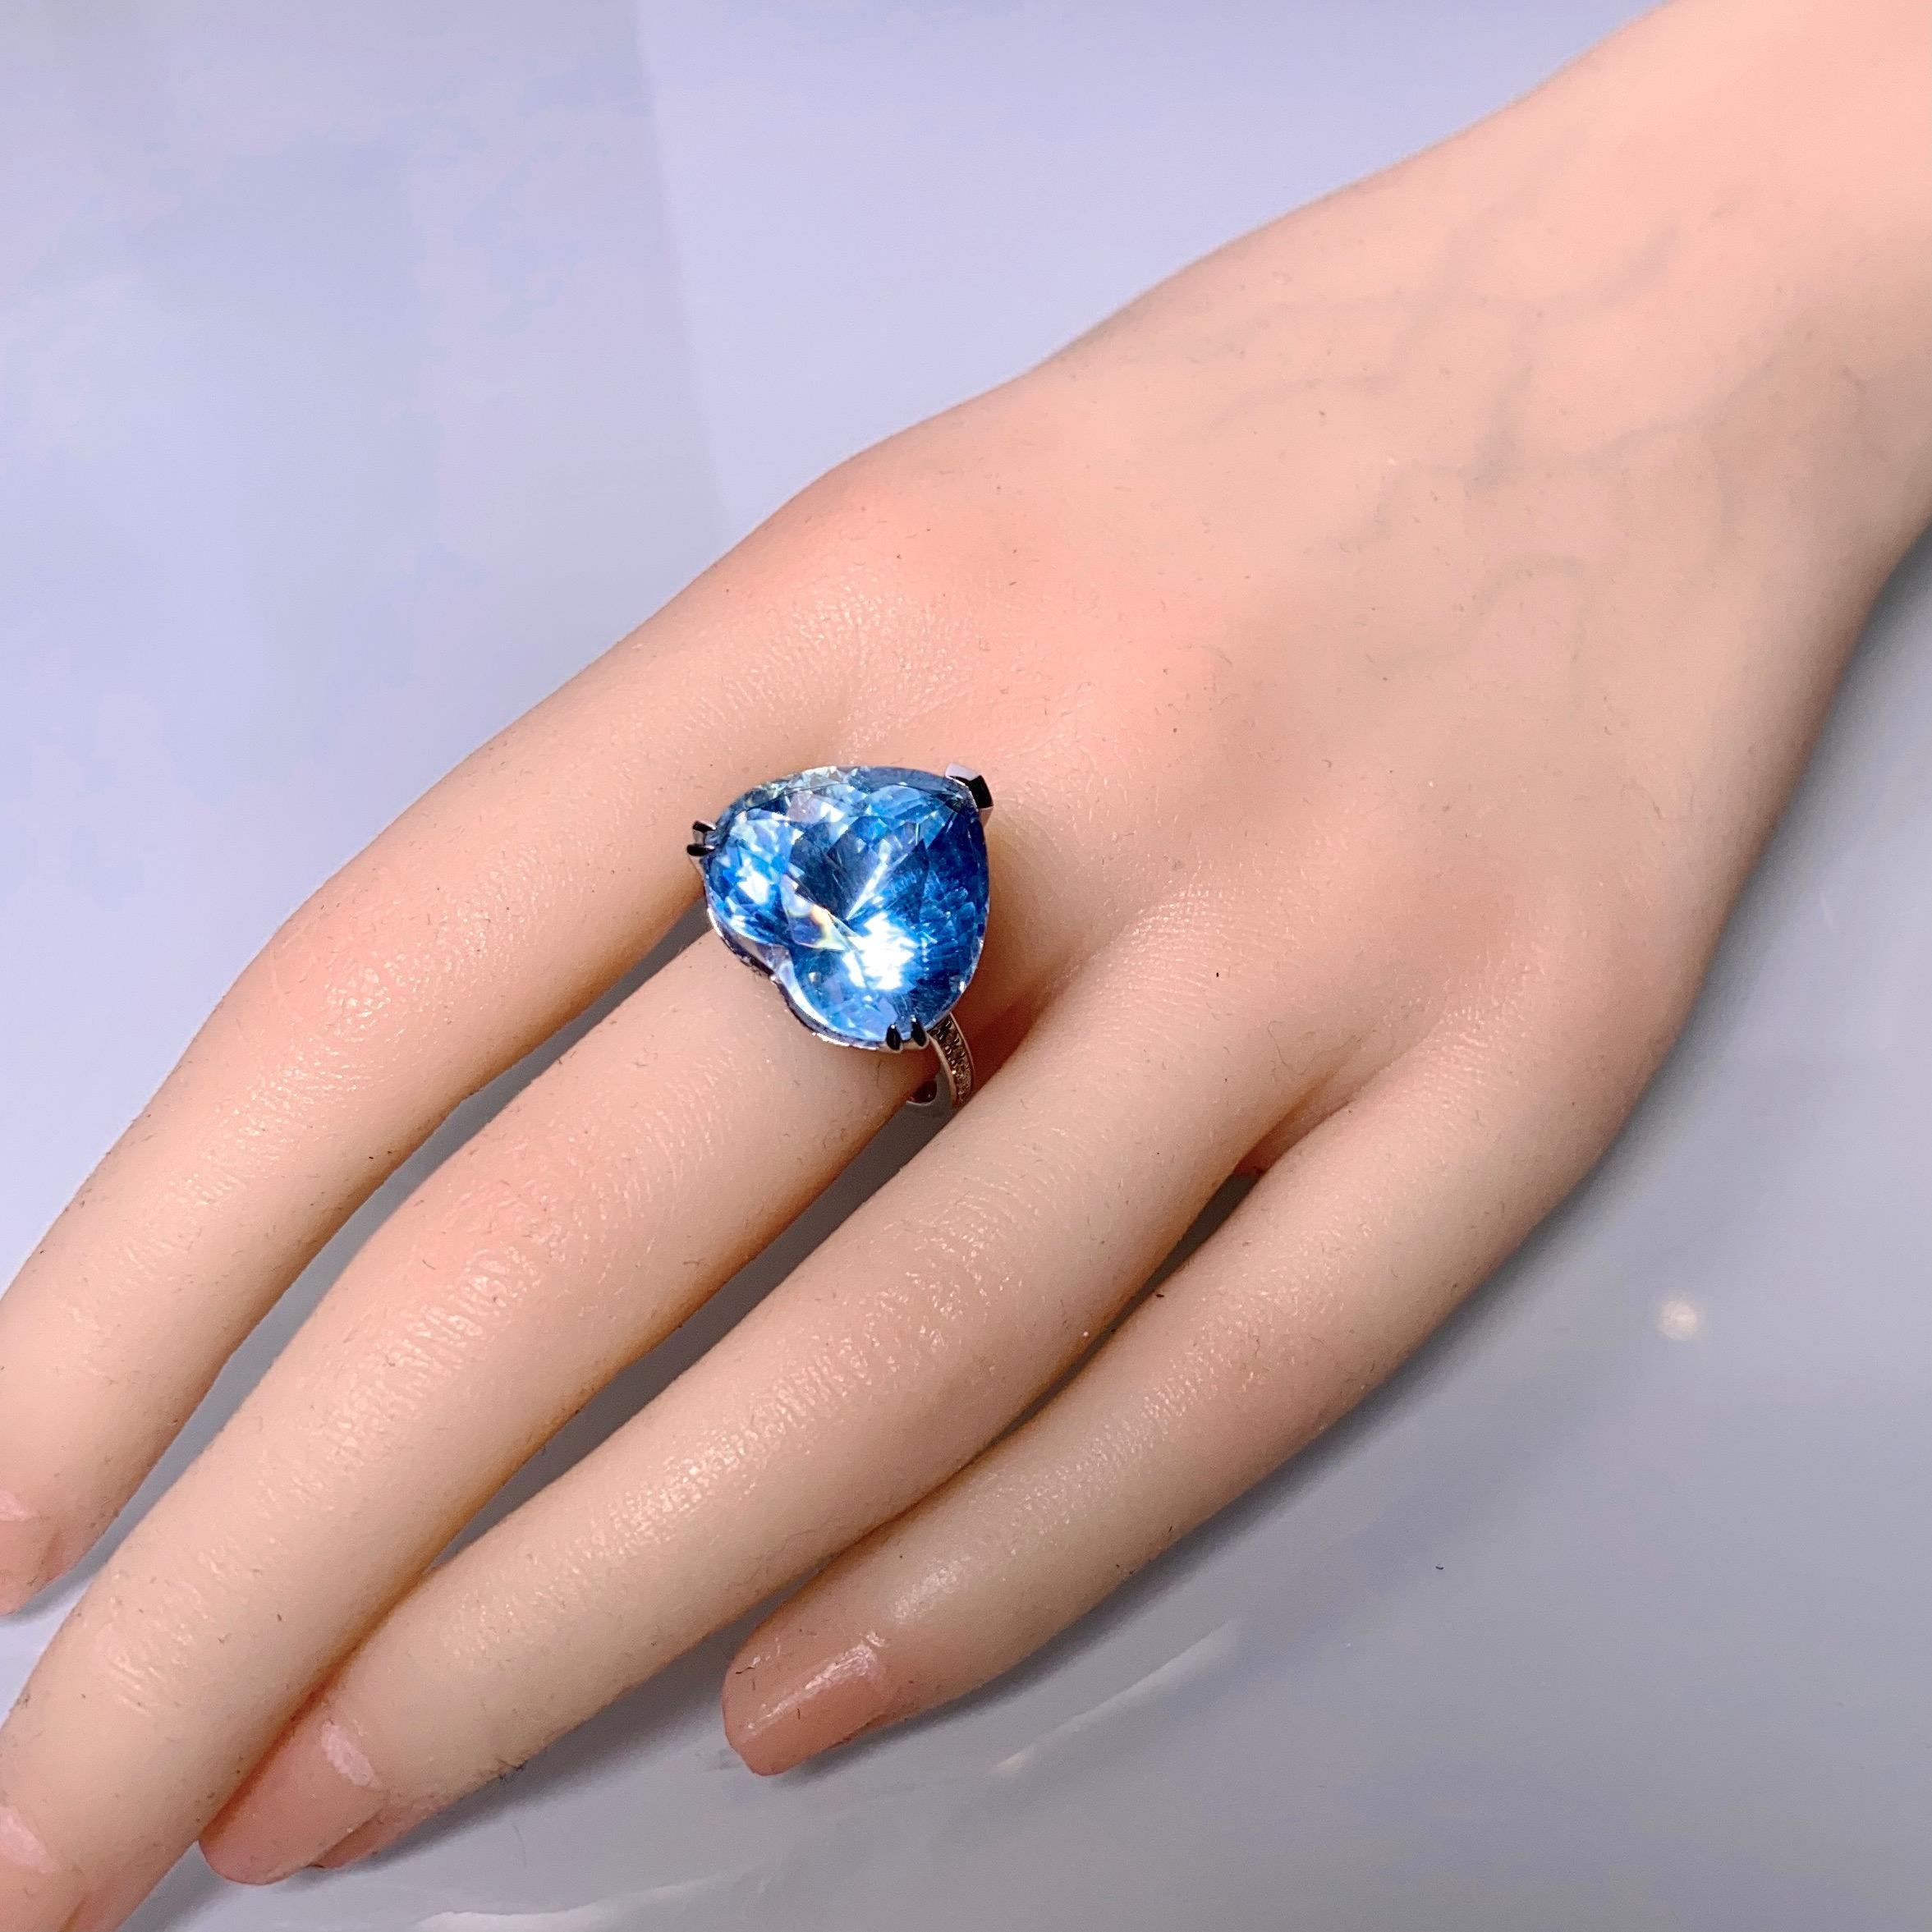 Brilliant Cut 16.39 Ct Intense Blue Aquamarine and Diamond Ring in 18k White Gold